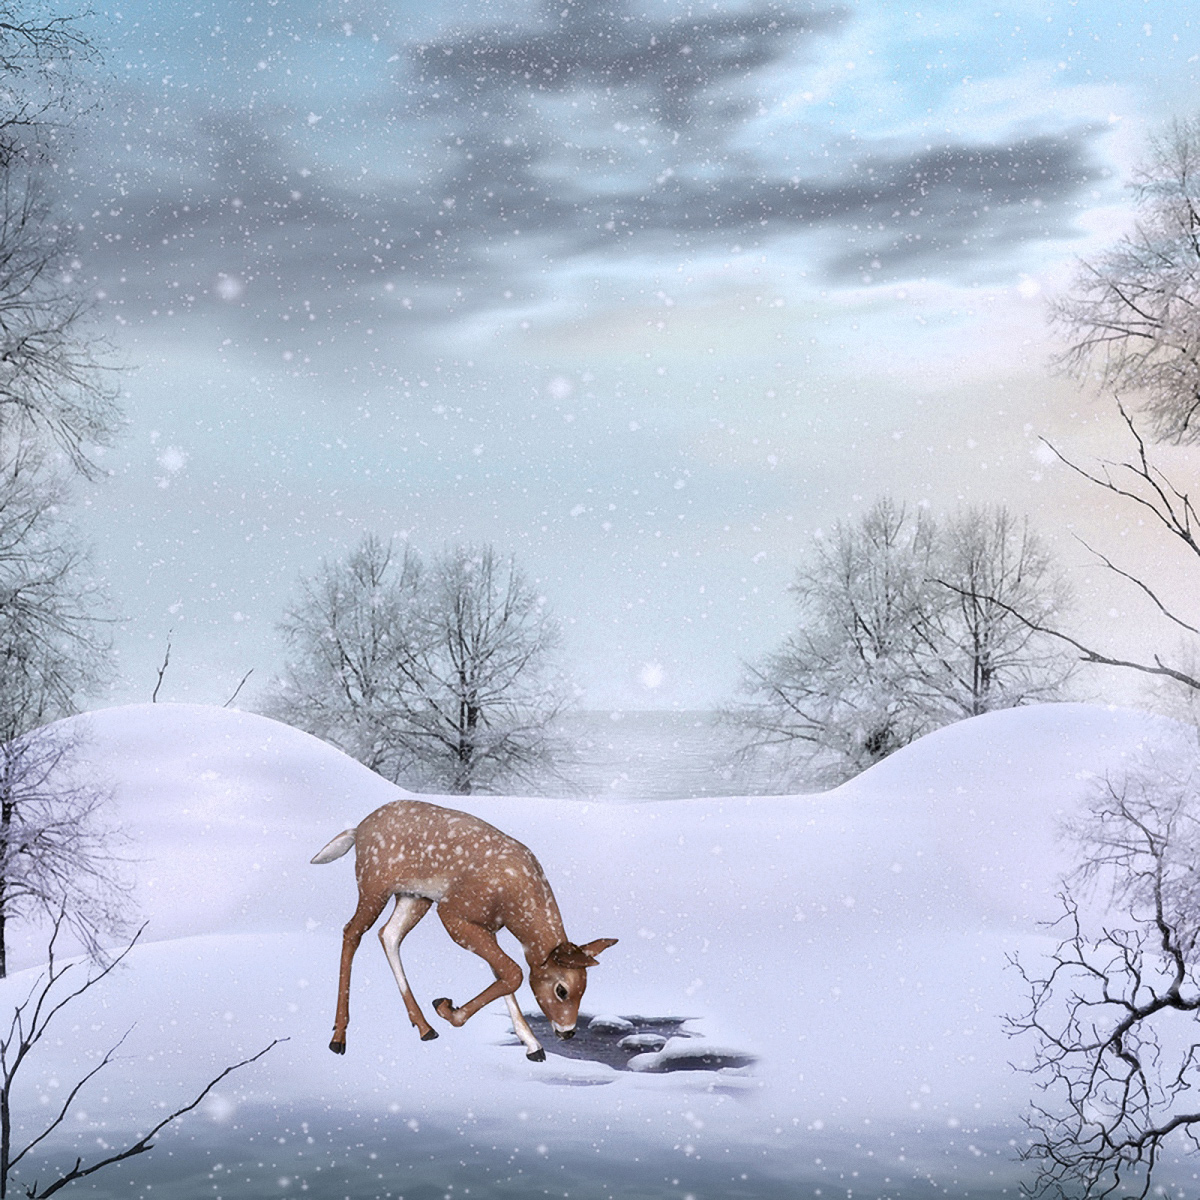 https://gallery.yopriceville.com/var/albums/Backgrounds/Cute_Winter_Background_with_Deer.jpg?m=1399676400